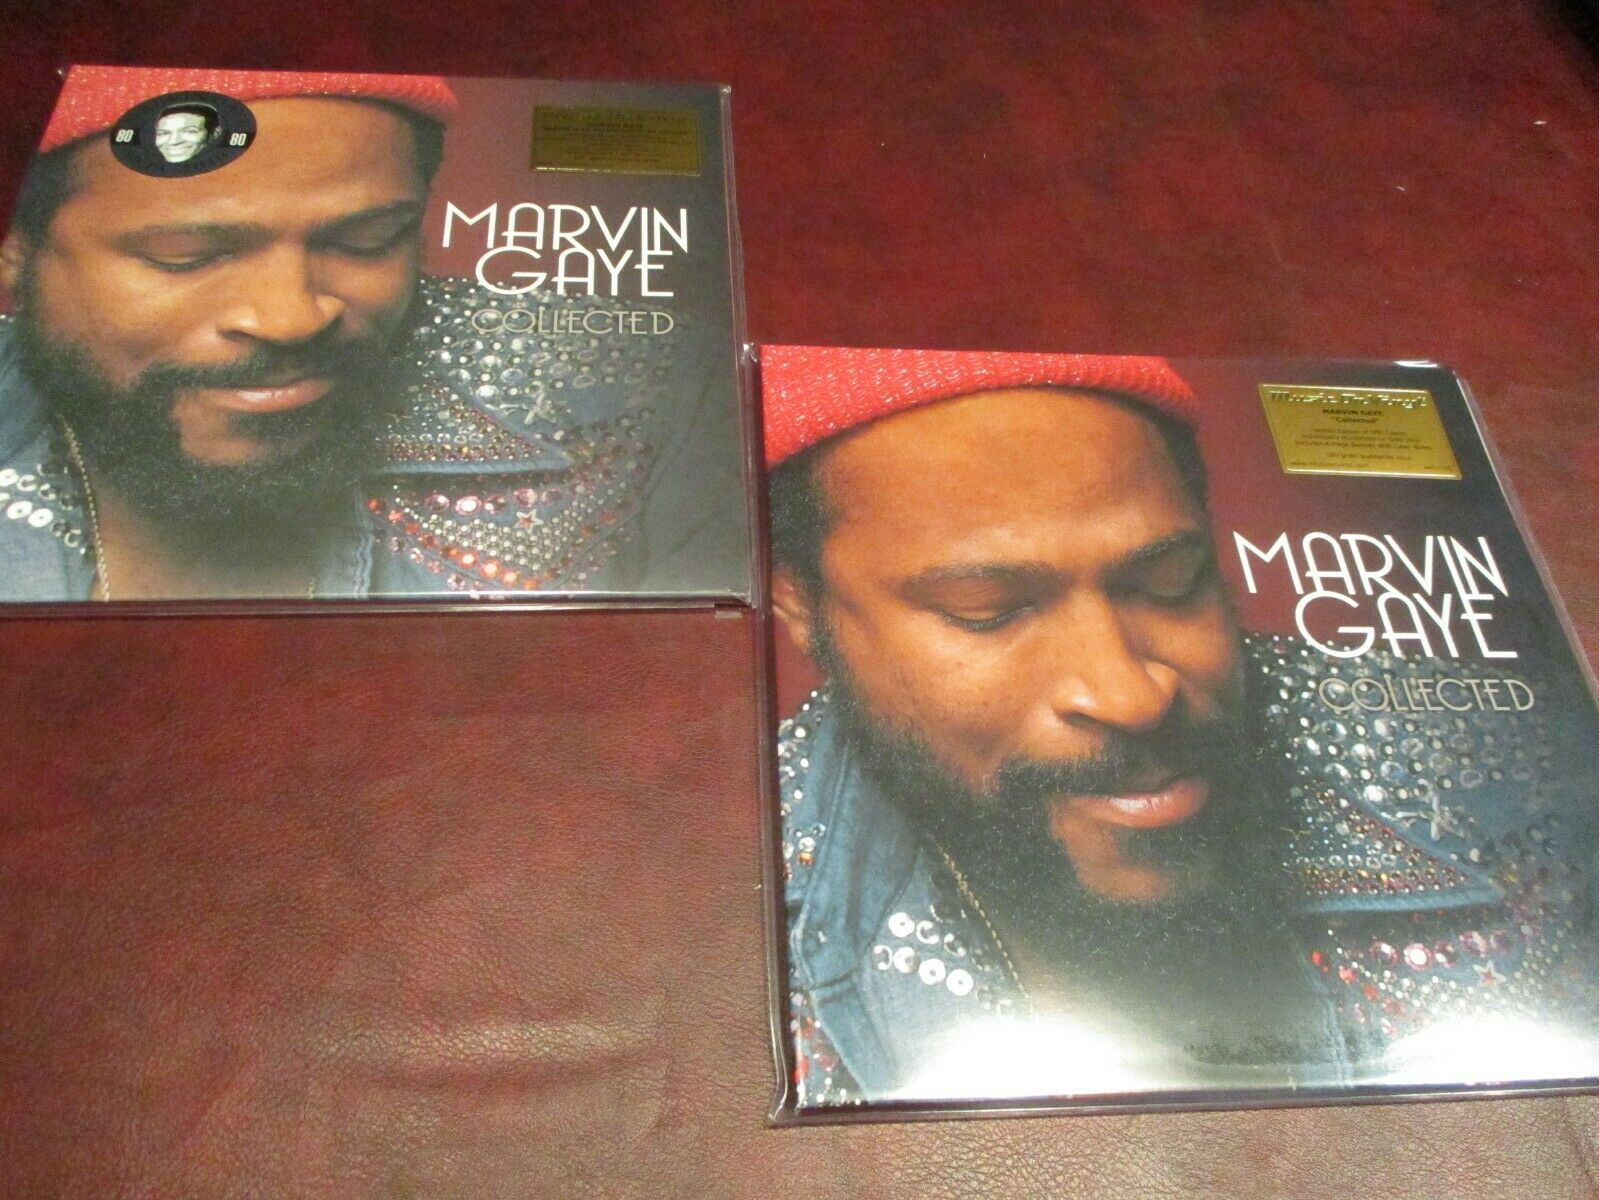 Marvin Gaye Let's Get it On (180g vinyl LP ) - VinylVinyl